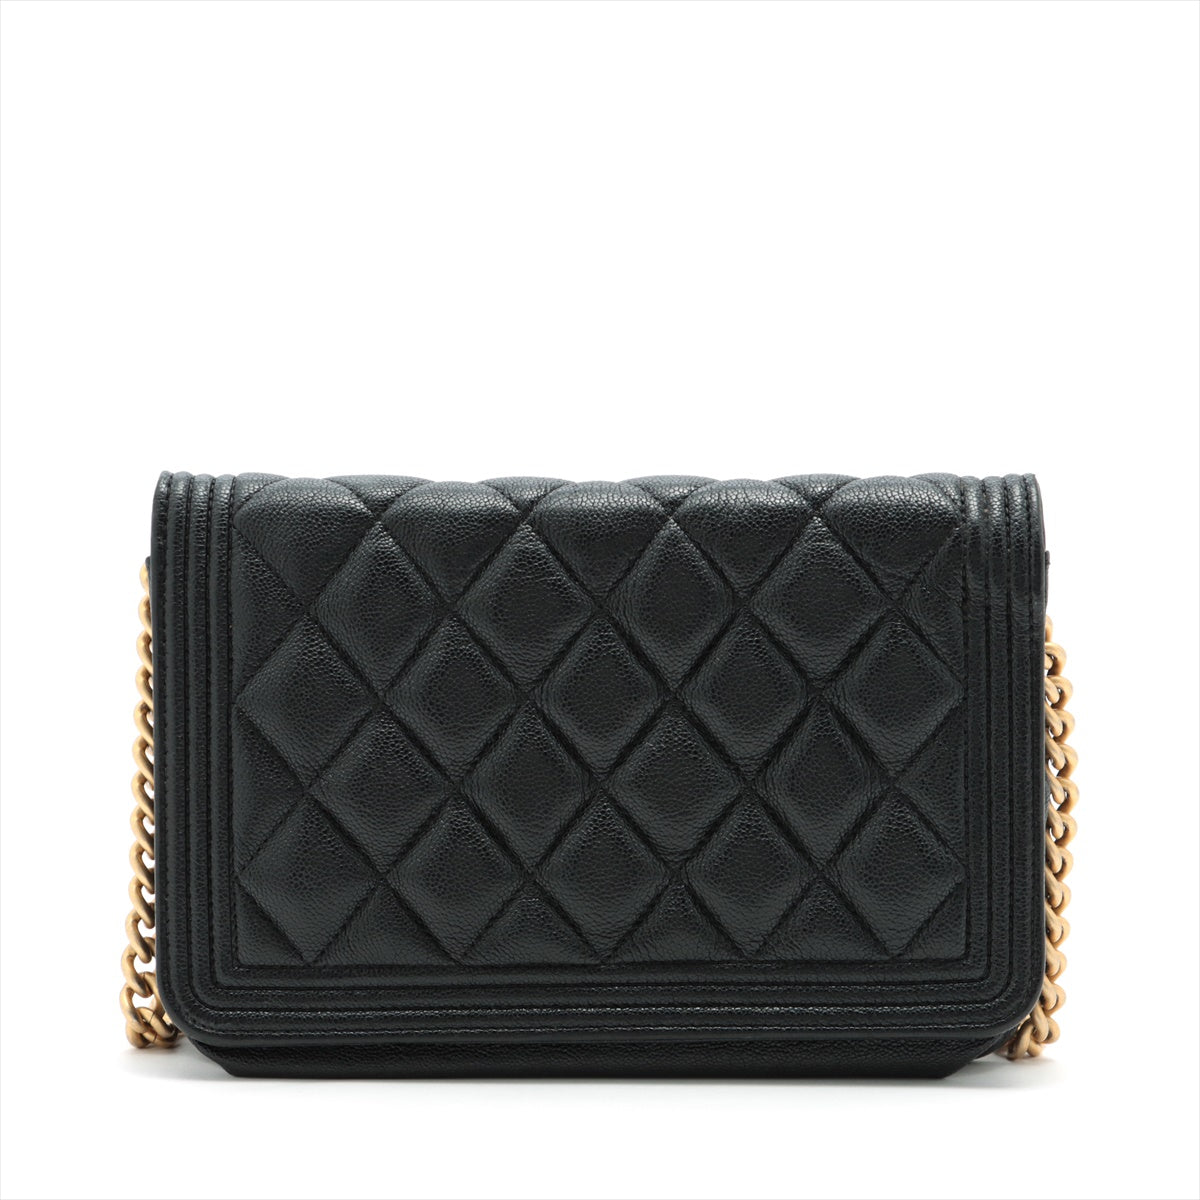 Chanel Boy Chanel Caviarskin Chain wallet Black Gold Metal fittings 28th